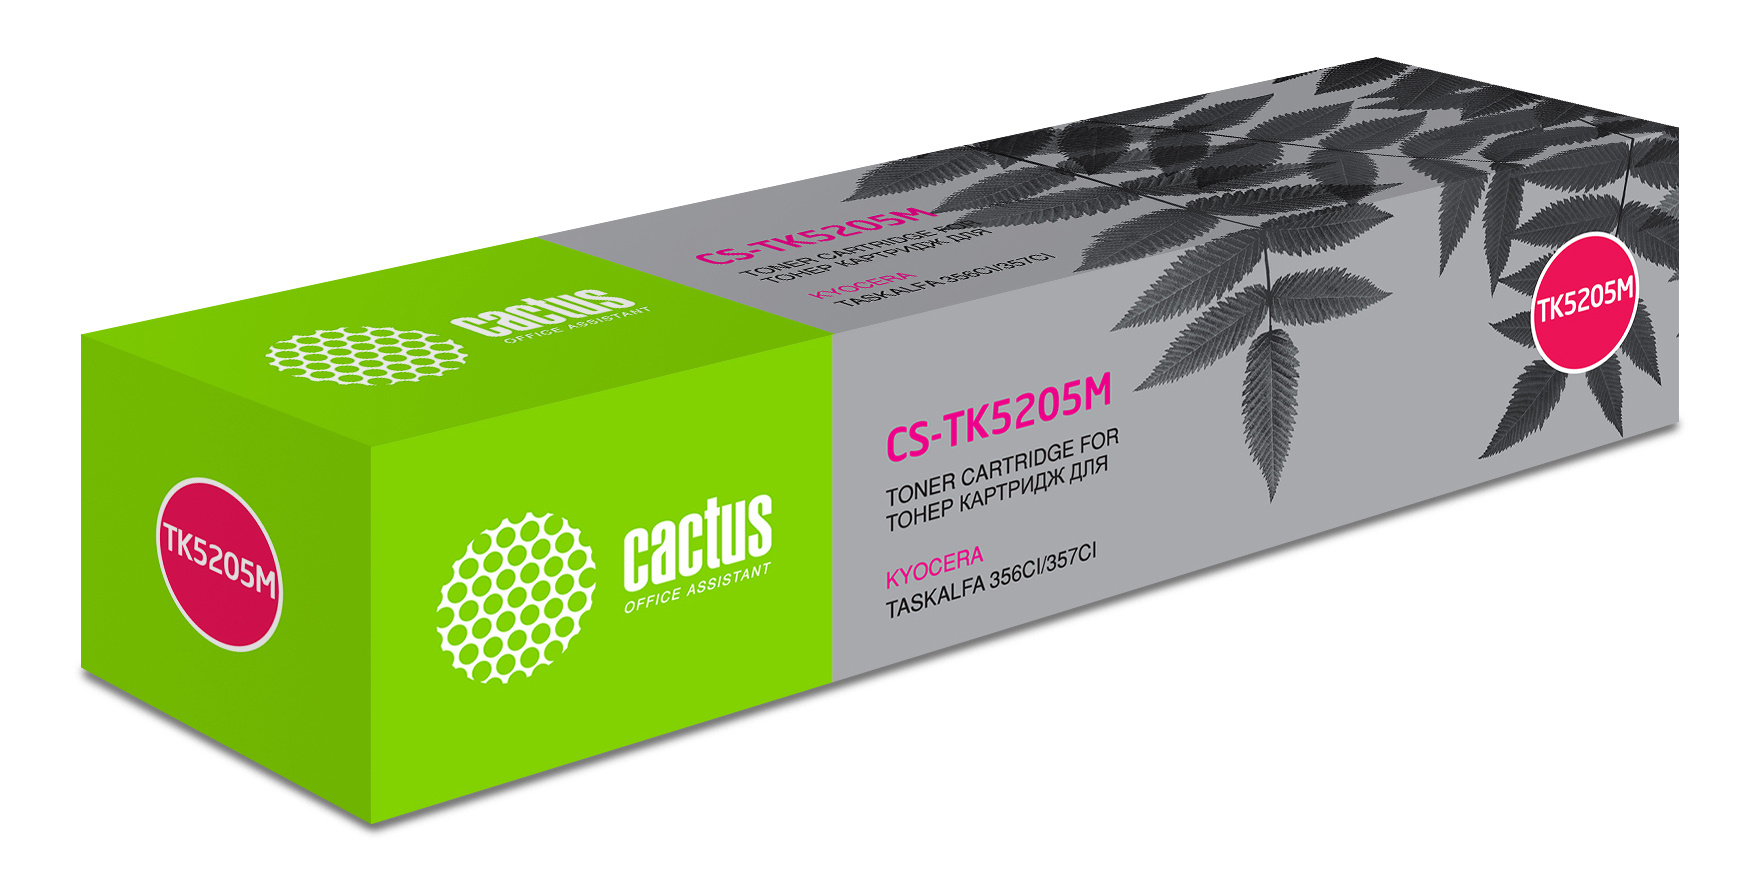   Cactus CS-TK5205M  (12000.)  Kyocera Ecosys 356ci